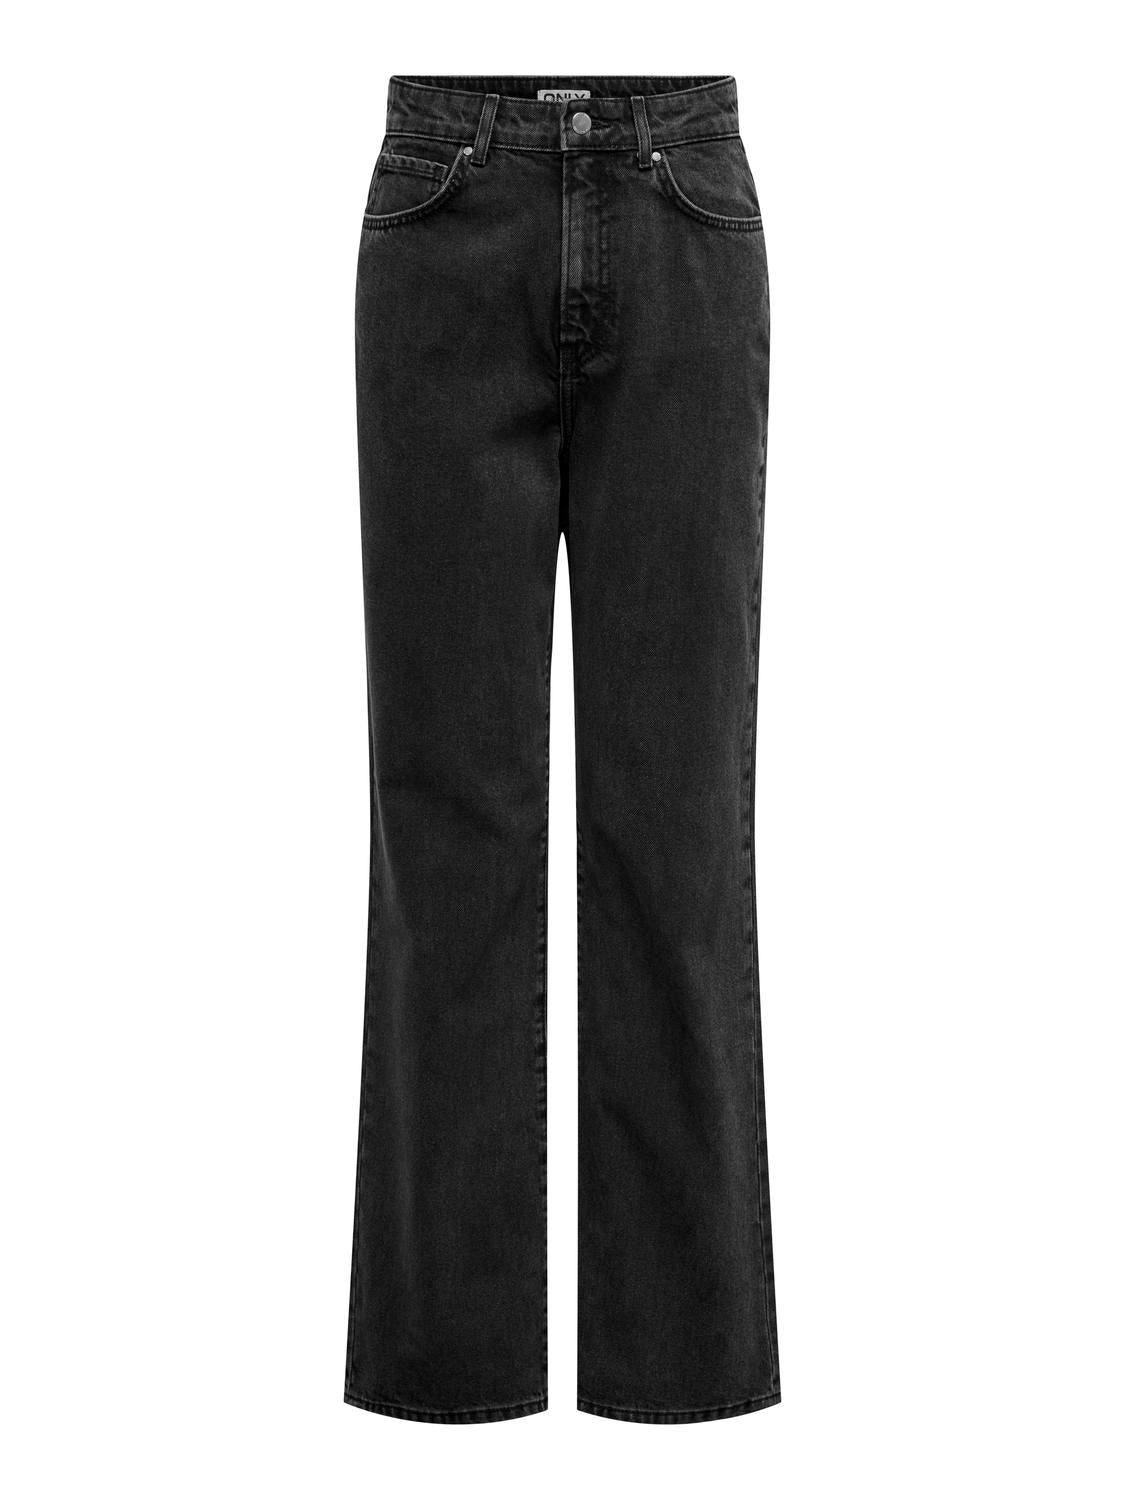 ONLSILJE Jeans - Washed Black